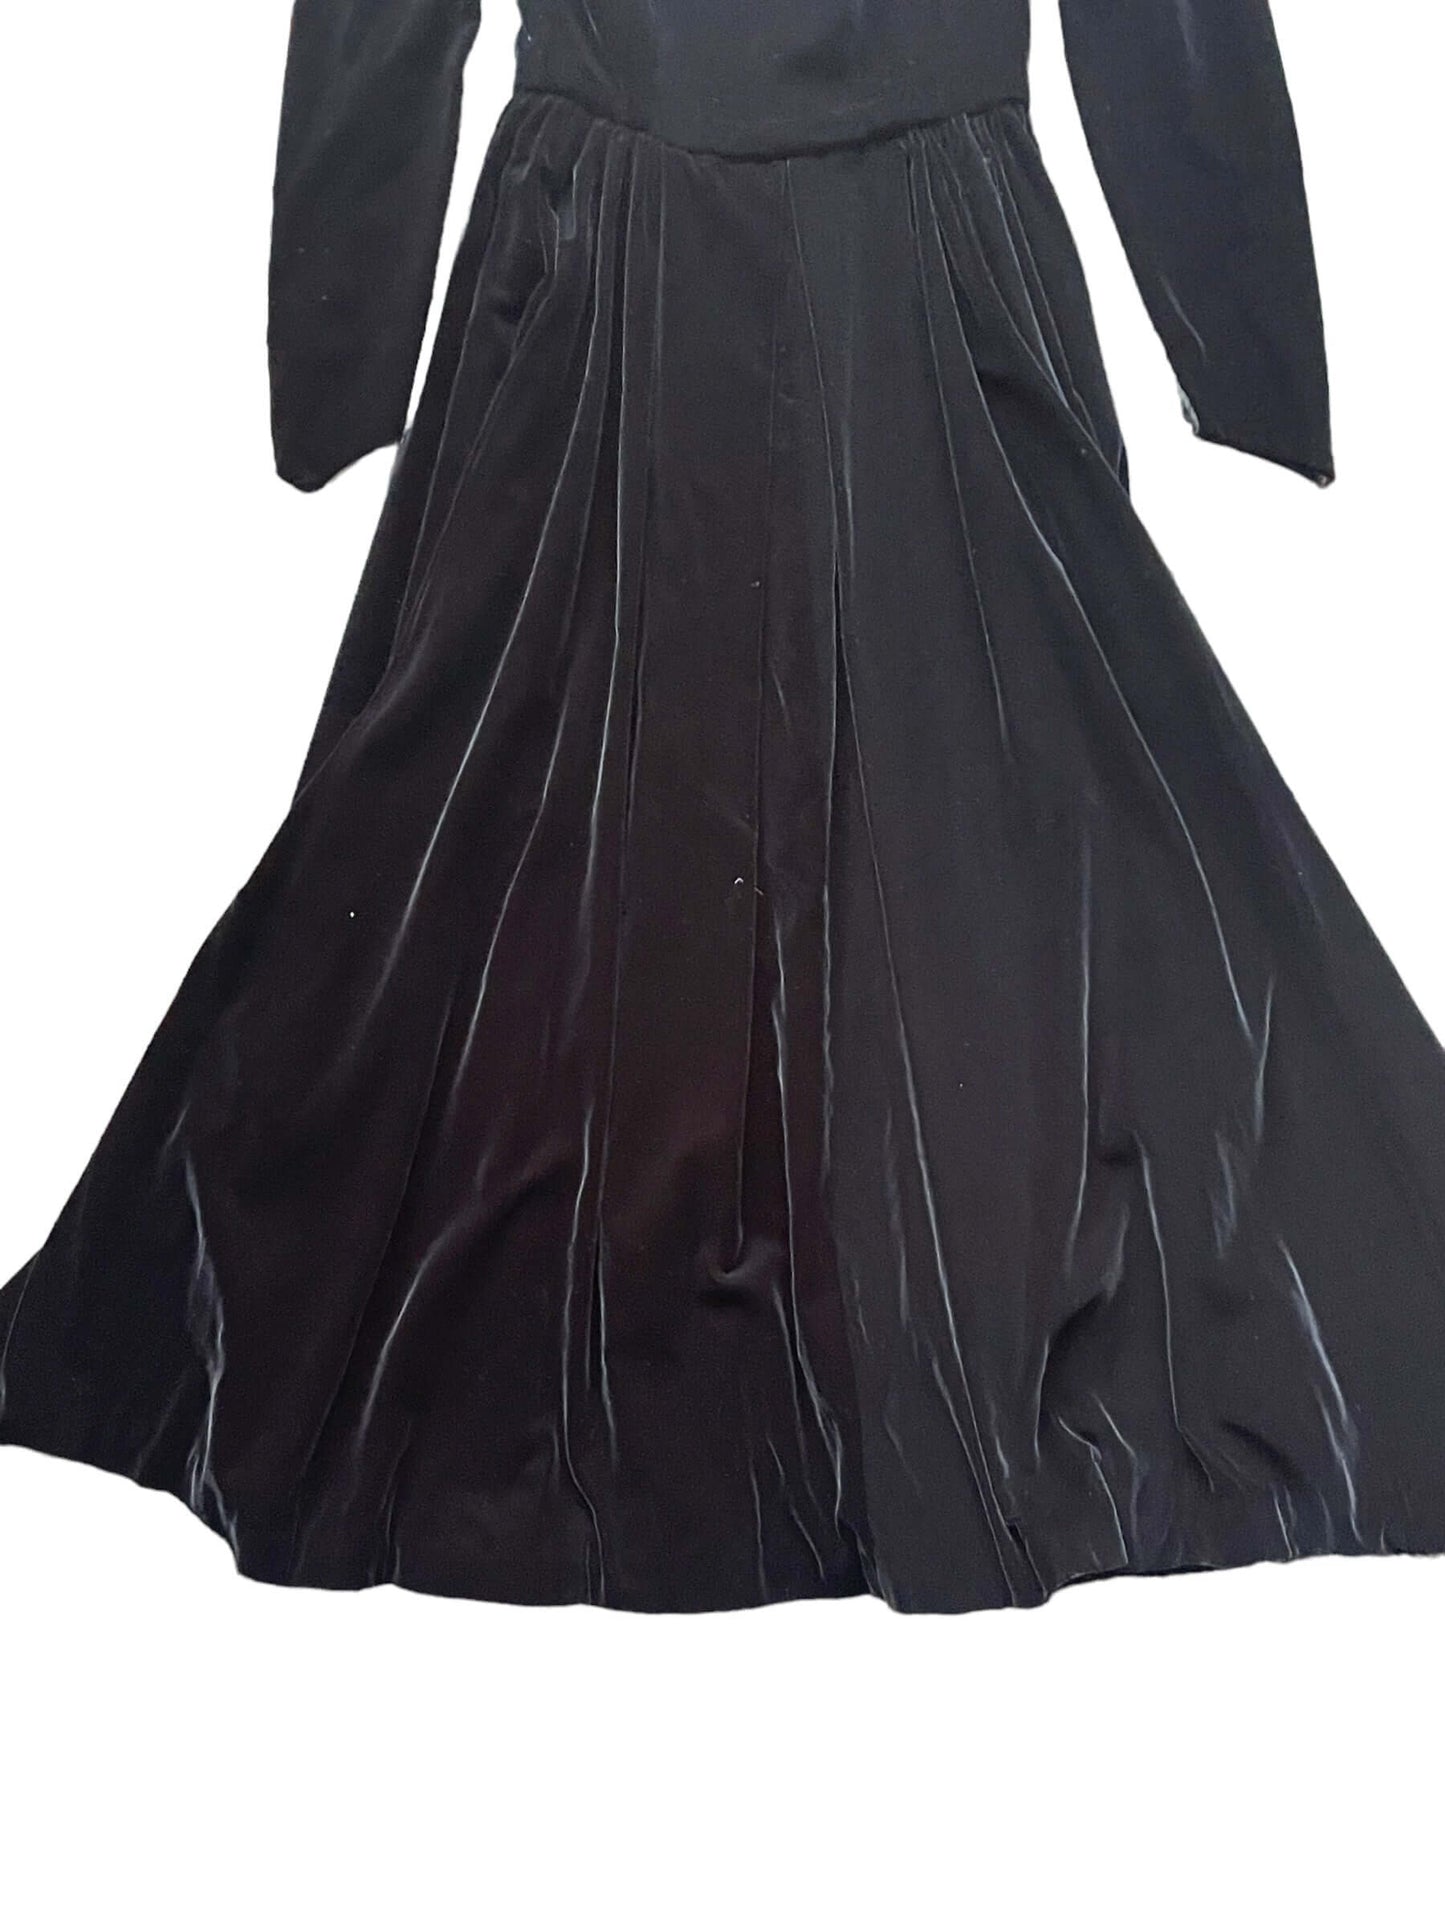 Front skirt view of Vintage 1970s Black Velvet Dress |  Barn Owl Vintage Dresses | Seattle Vintage Ladies Clothing